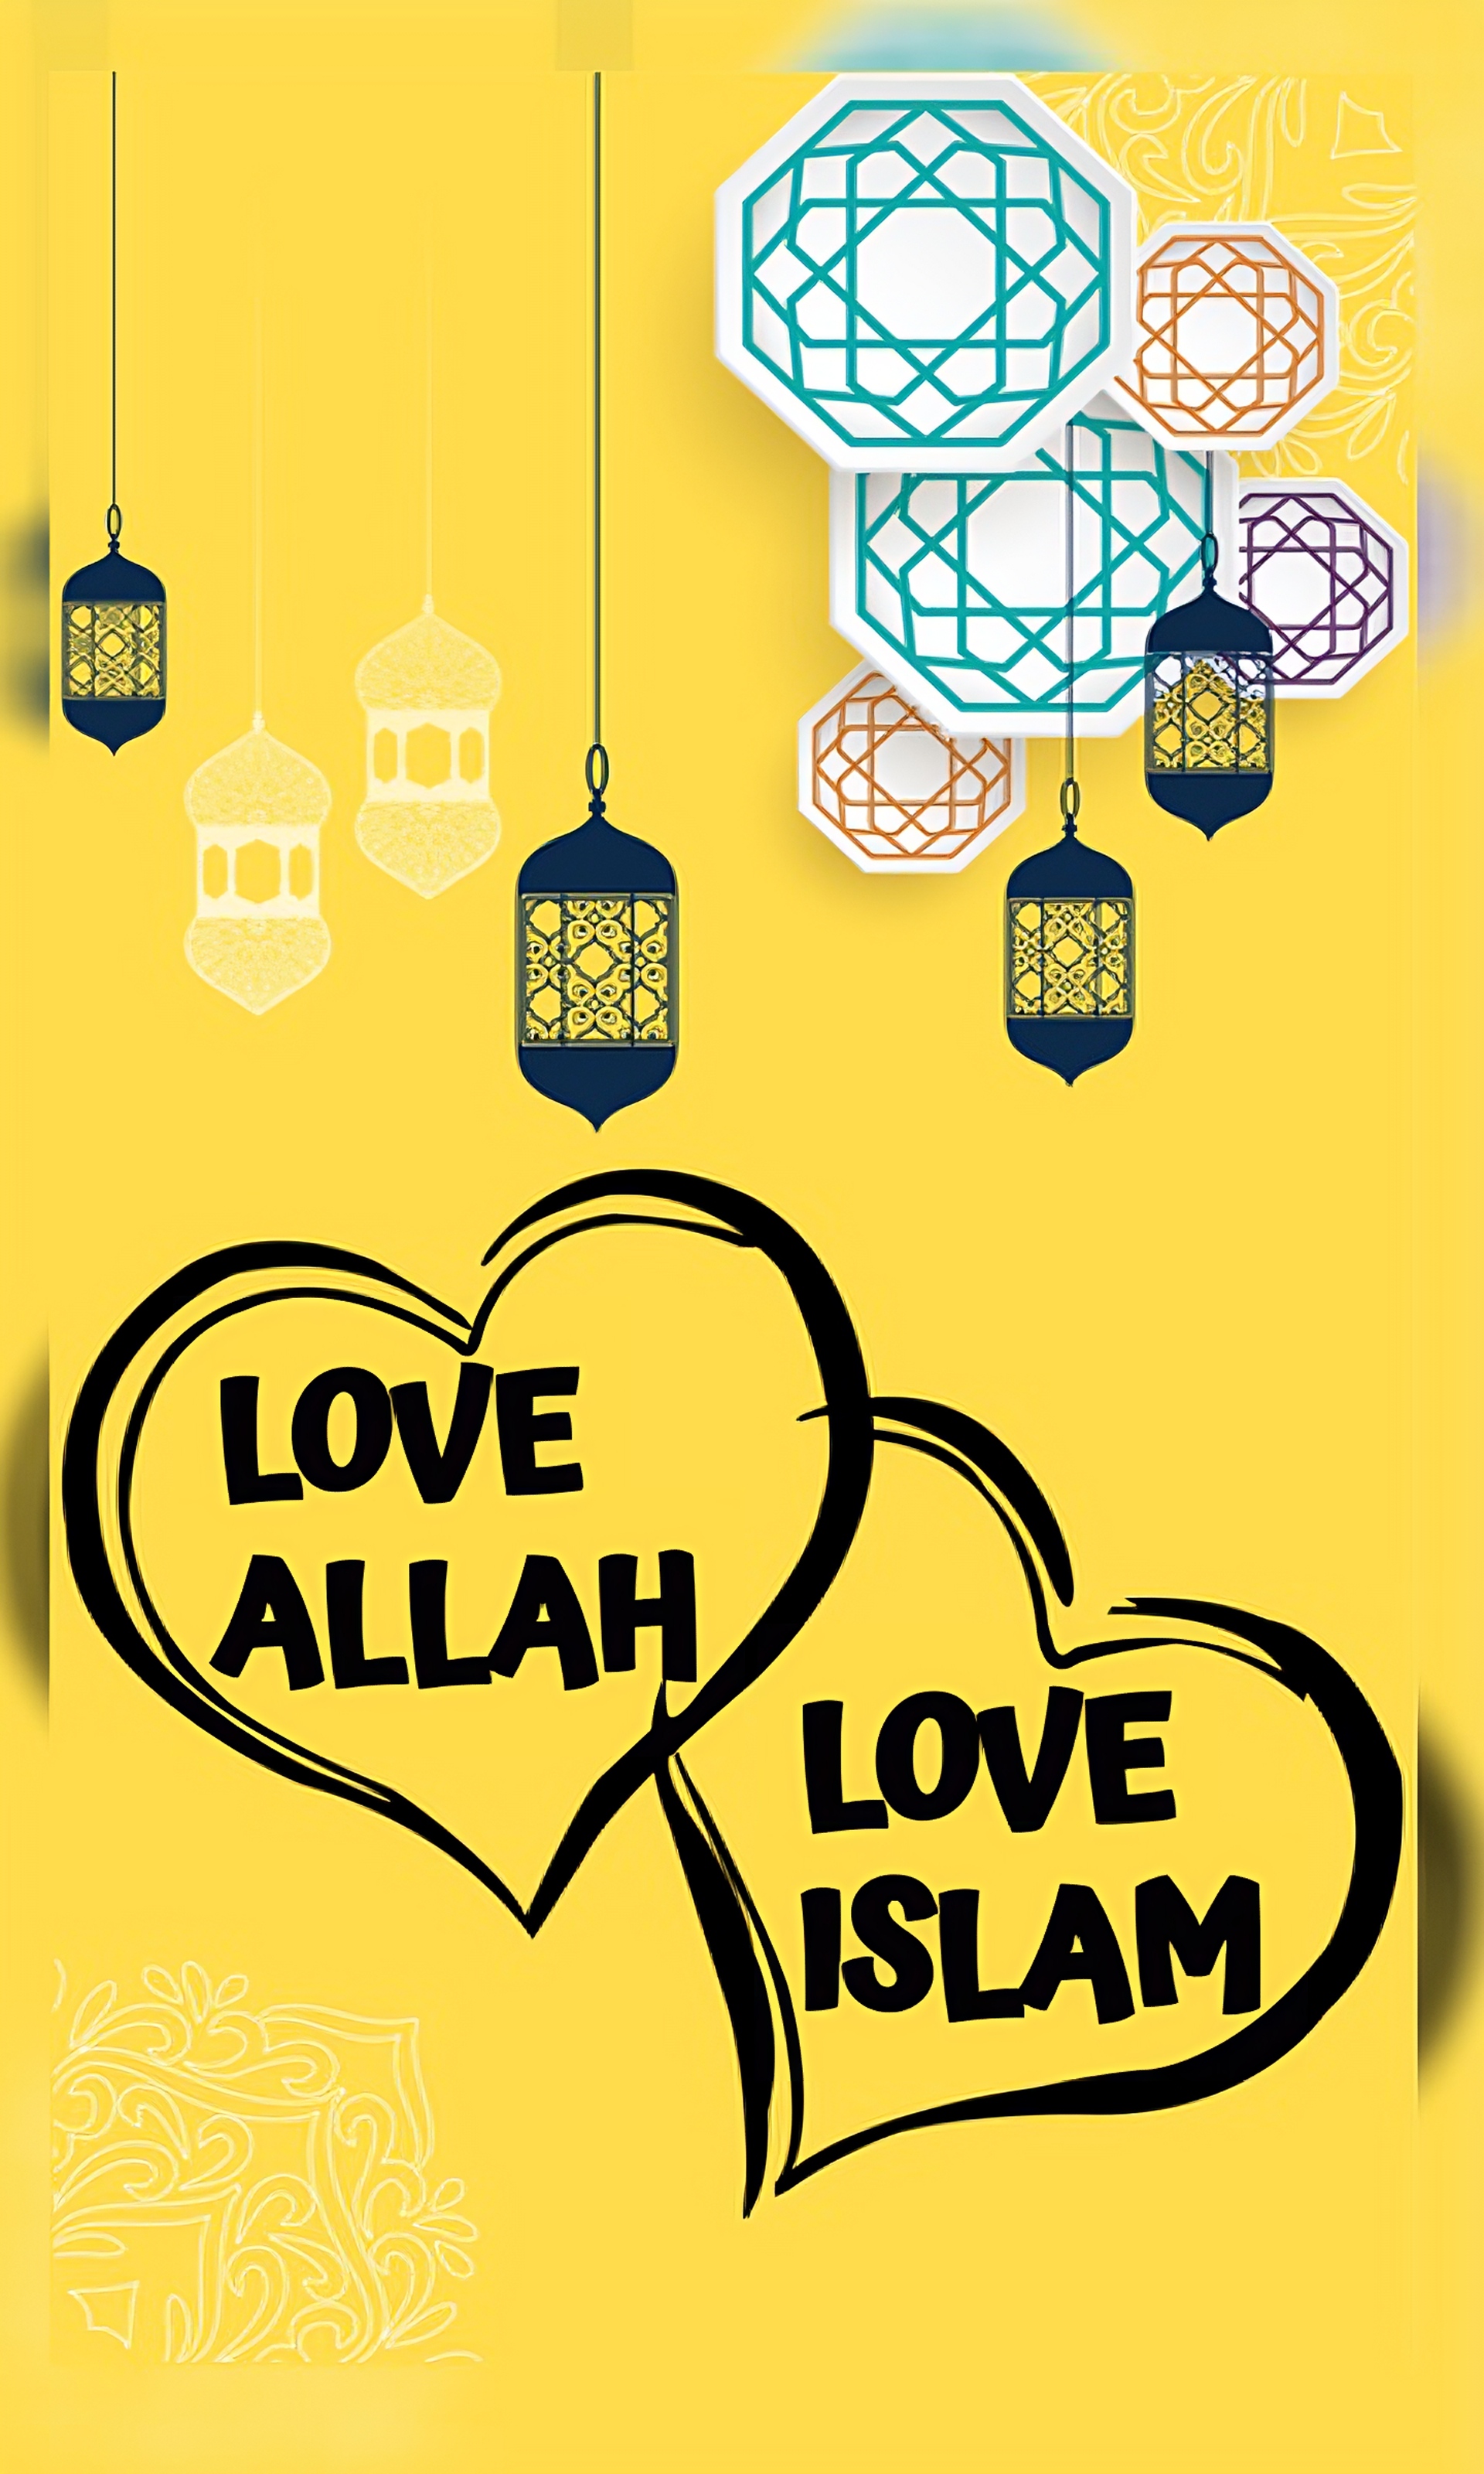 I Love Allah - love allah